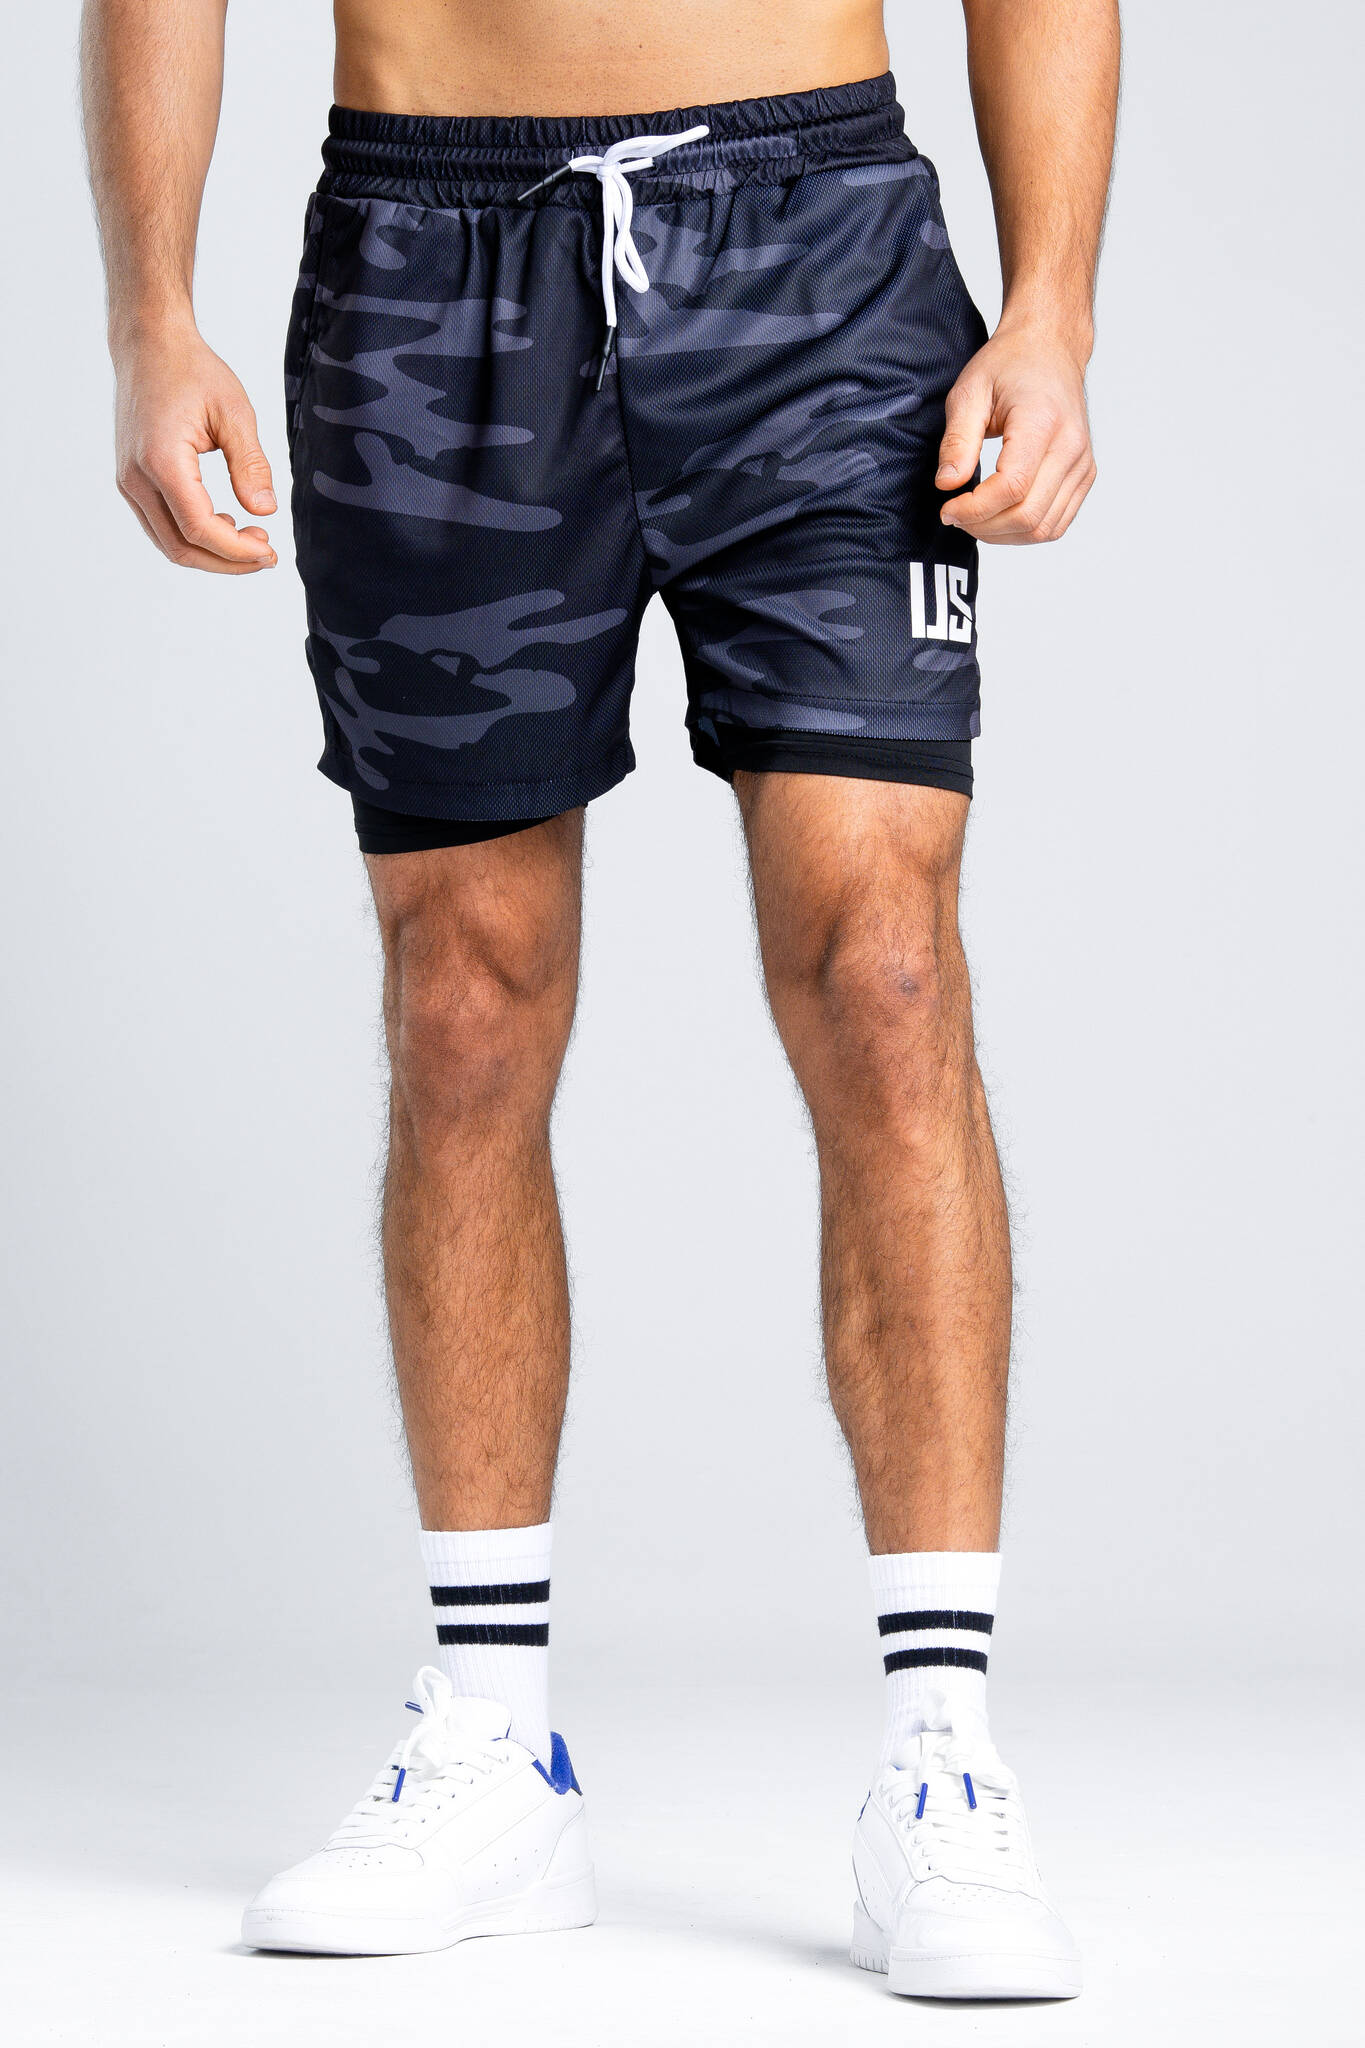 Camp David camo shorts